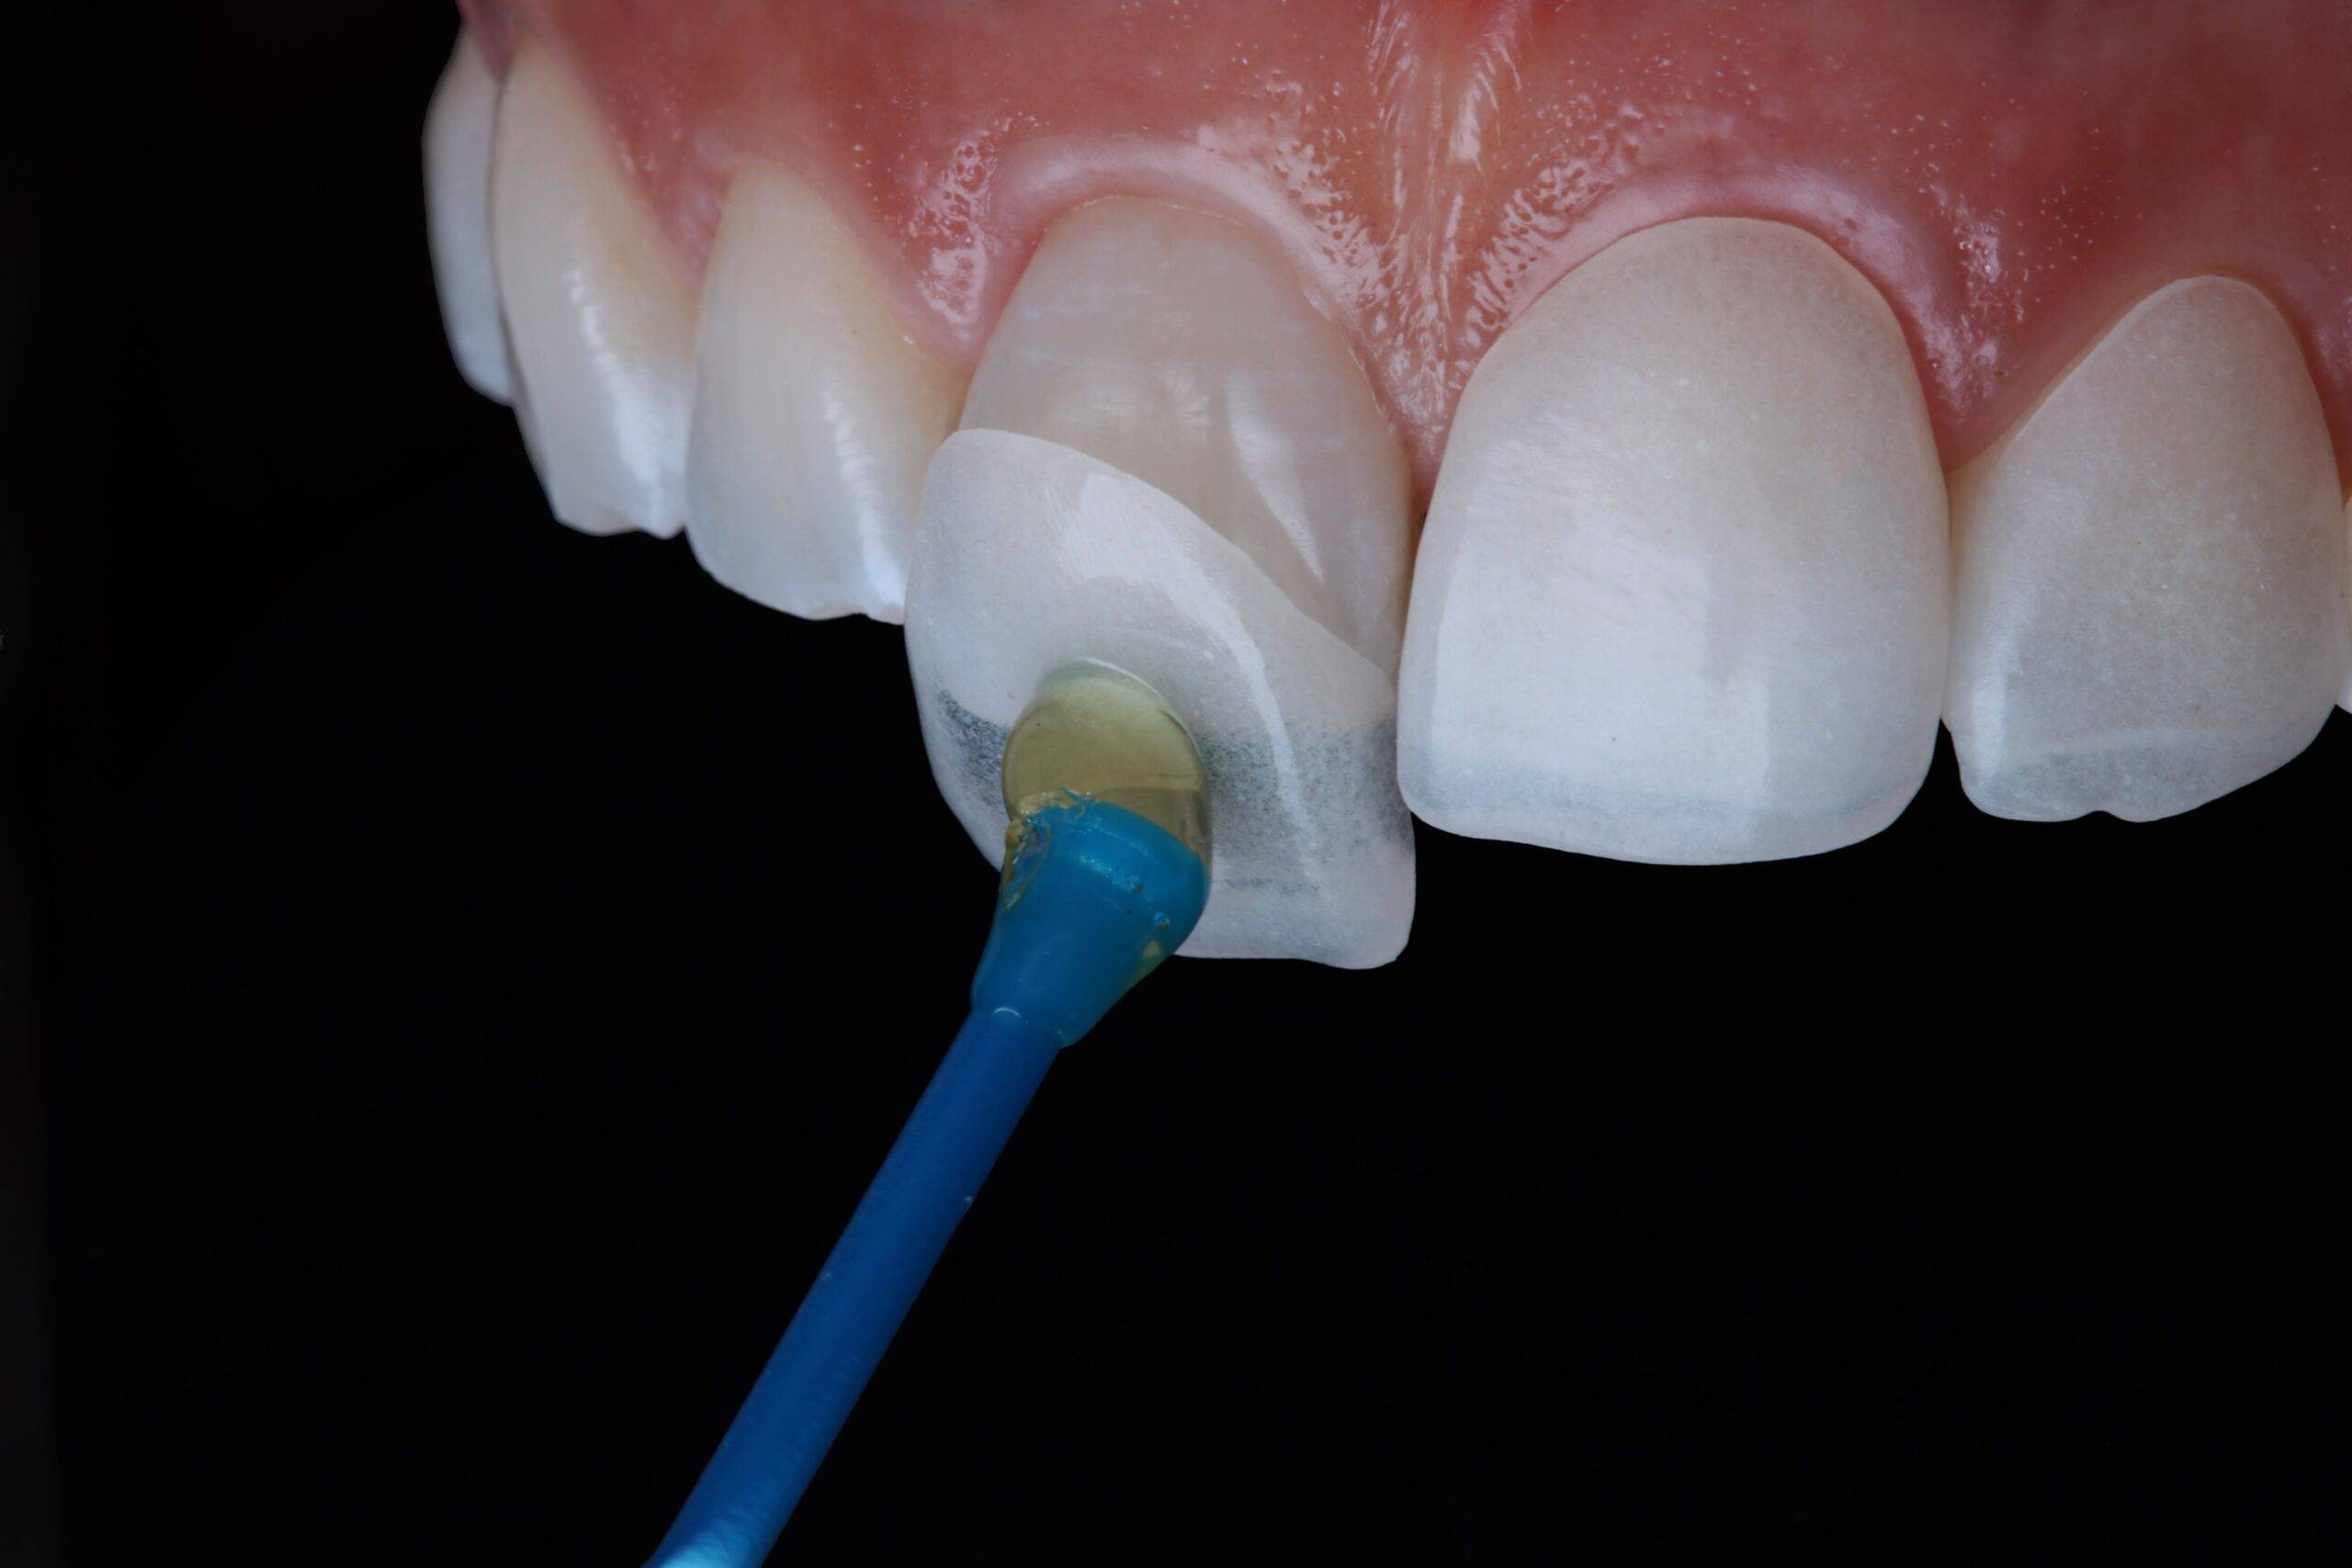 Improve Your Smile with Dental Veneers at Inima Dental Marbella